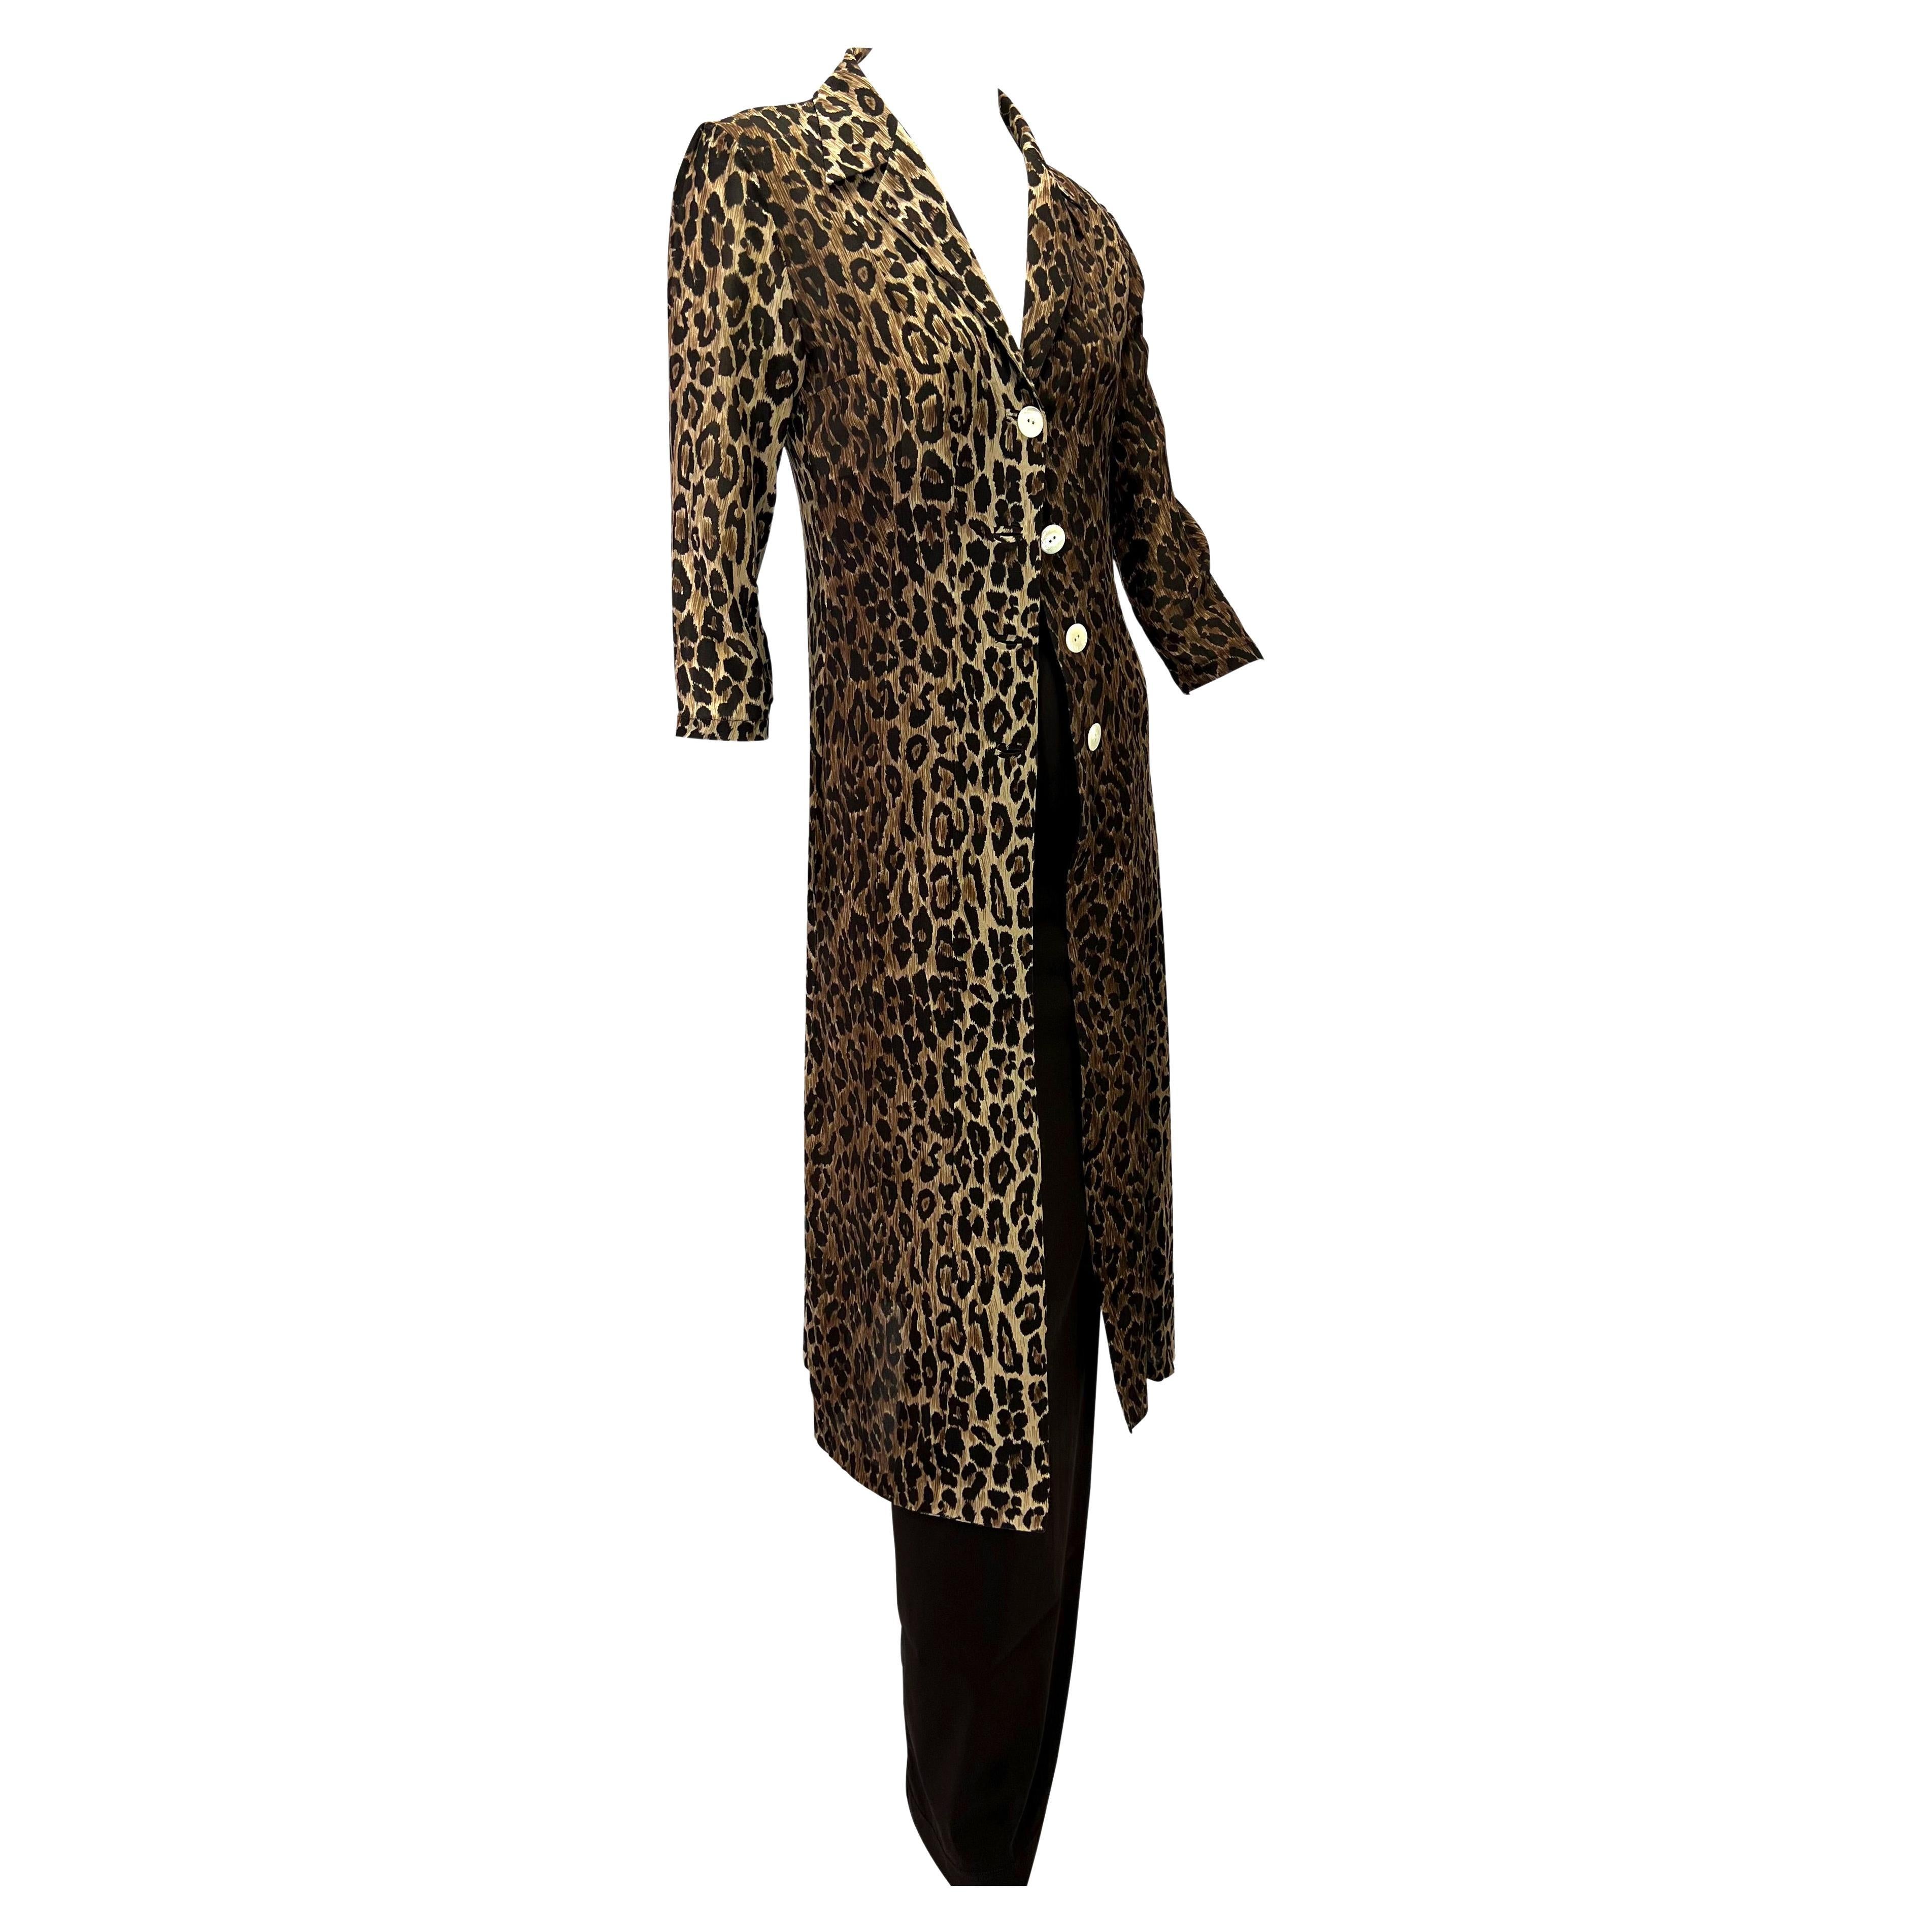 S/S 1997 Dolce & Gabbana Cheetah Print Sheer Cardigan High-Waisted Skirt Set For Sale 4